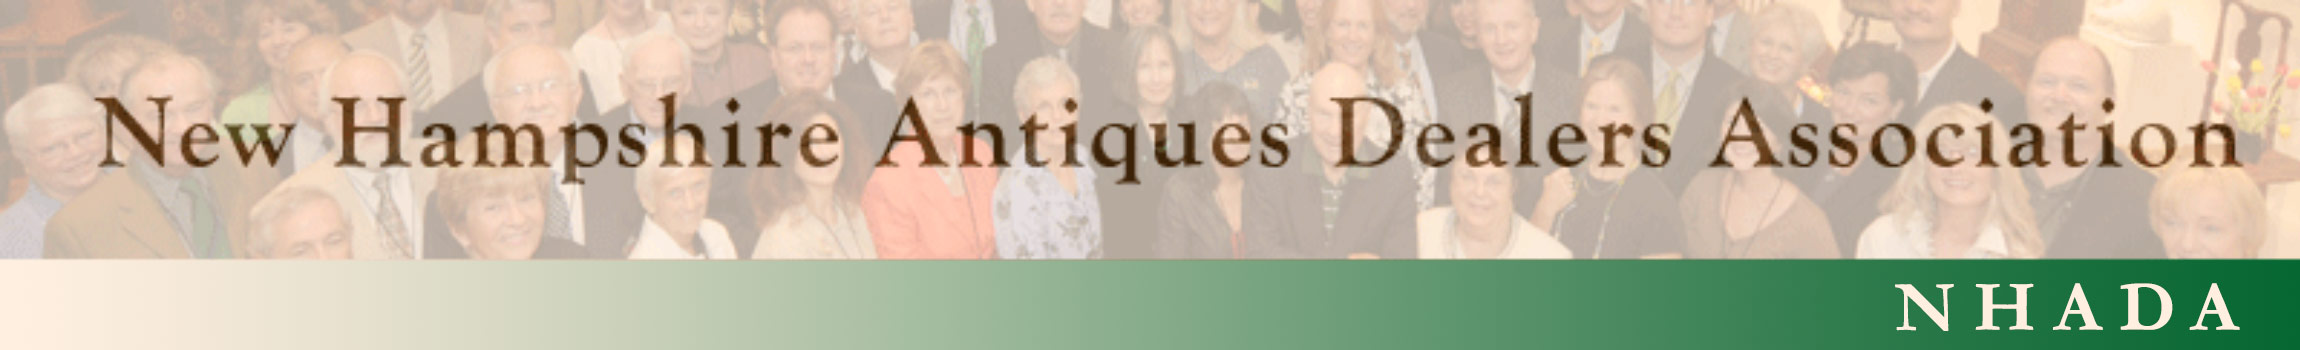 New Hampshire Antiques Dealers Association (NHADA)